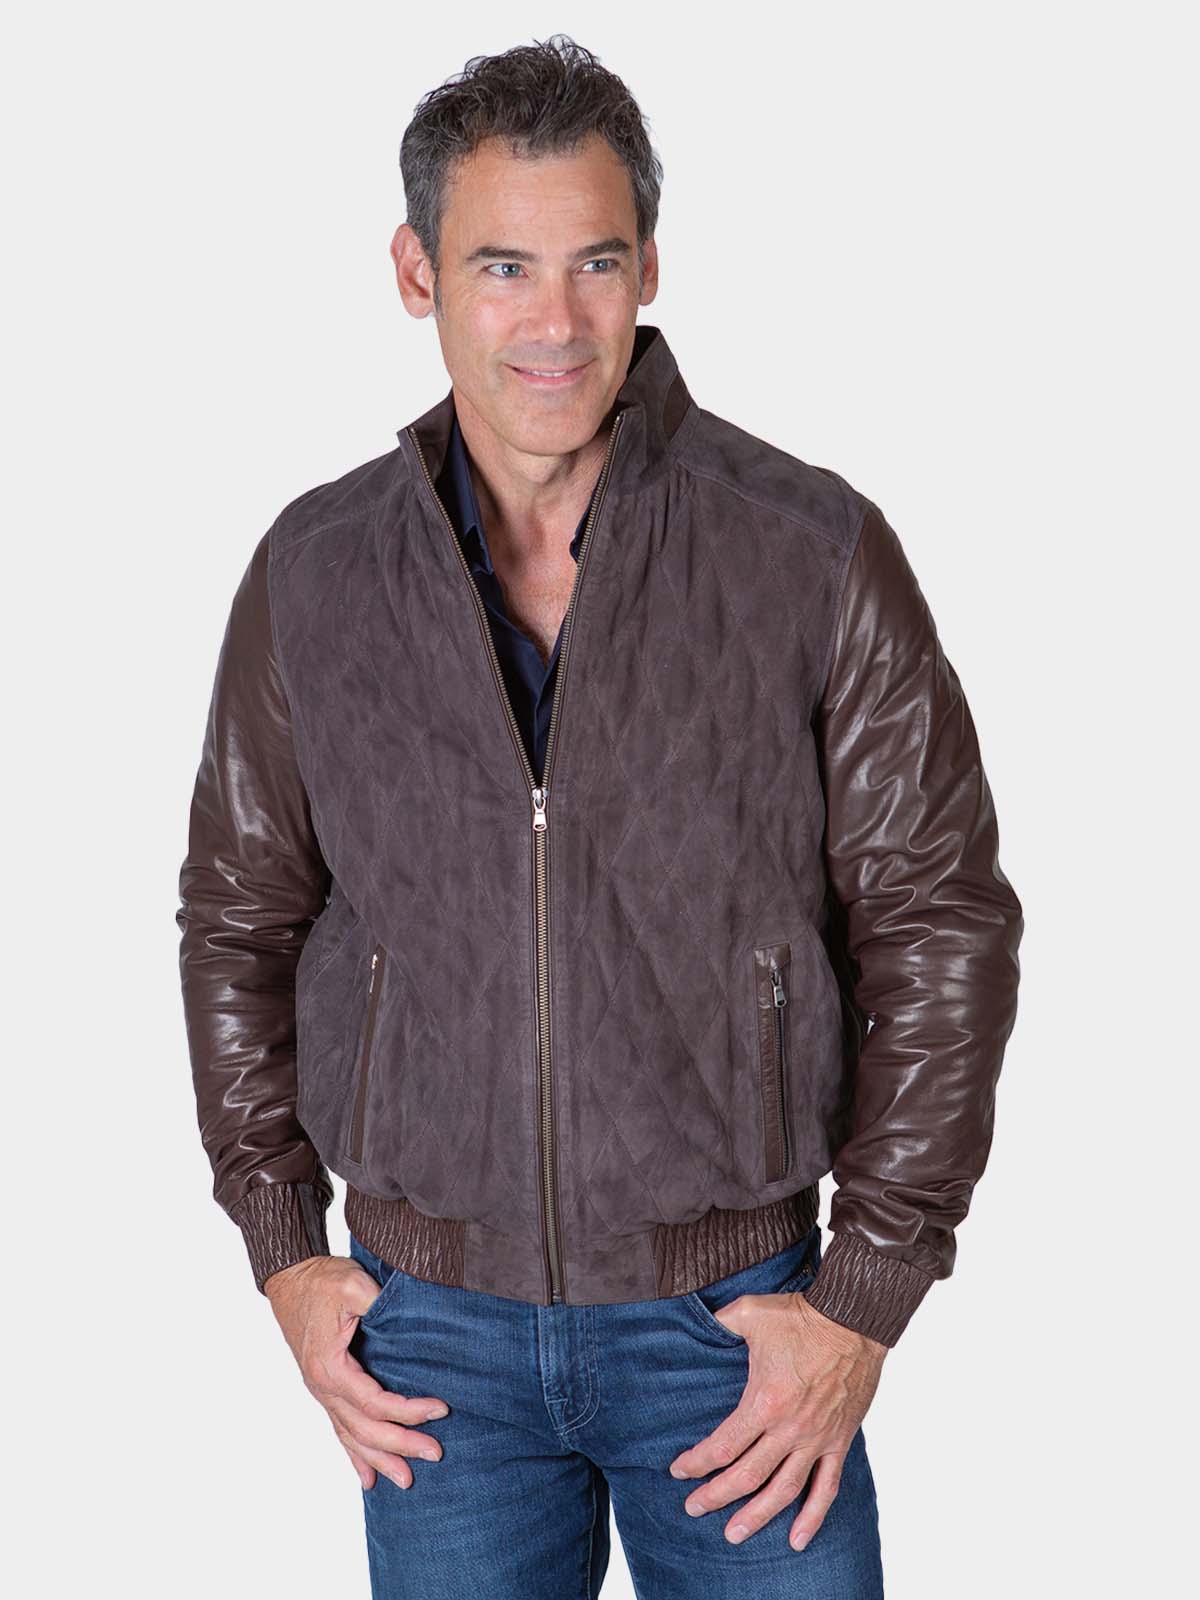 Brownstone Suede/Leather Jacket - Men's Medium | Day Furs